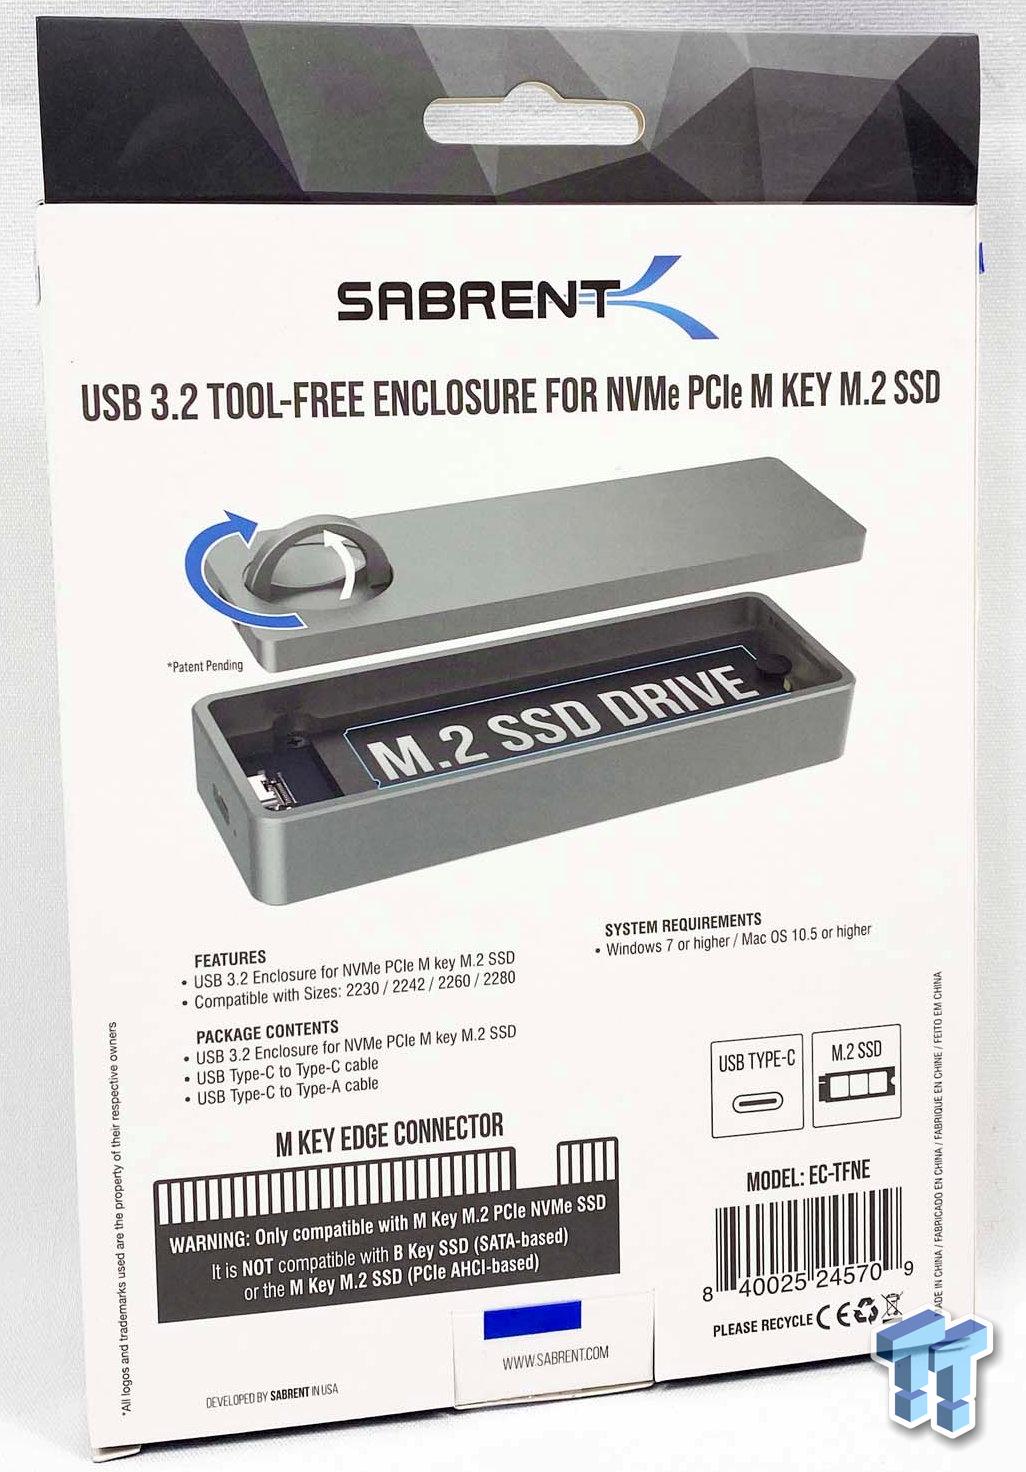 EC-TFNE Sabrent USB 3.2 Tool-Free Enclosure for NVMe PCIe M Key M.2 SSD SILVER